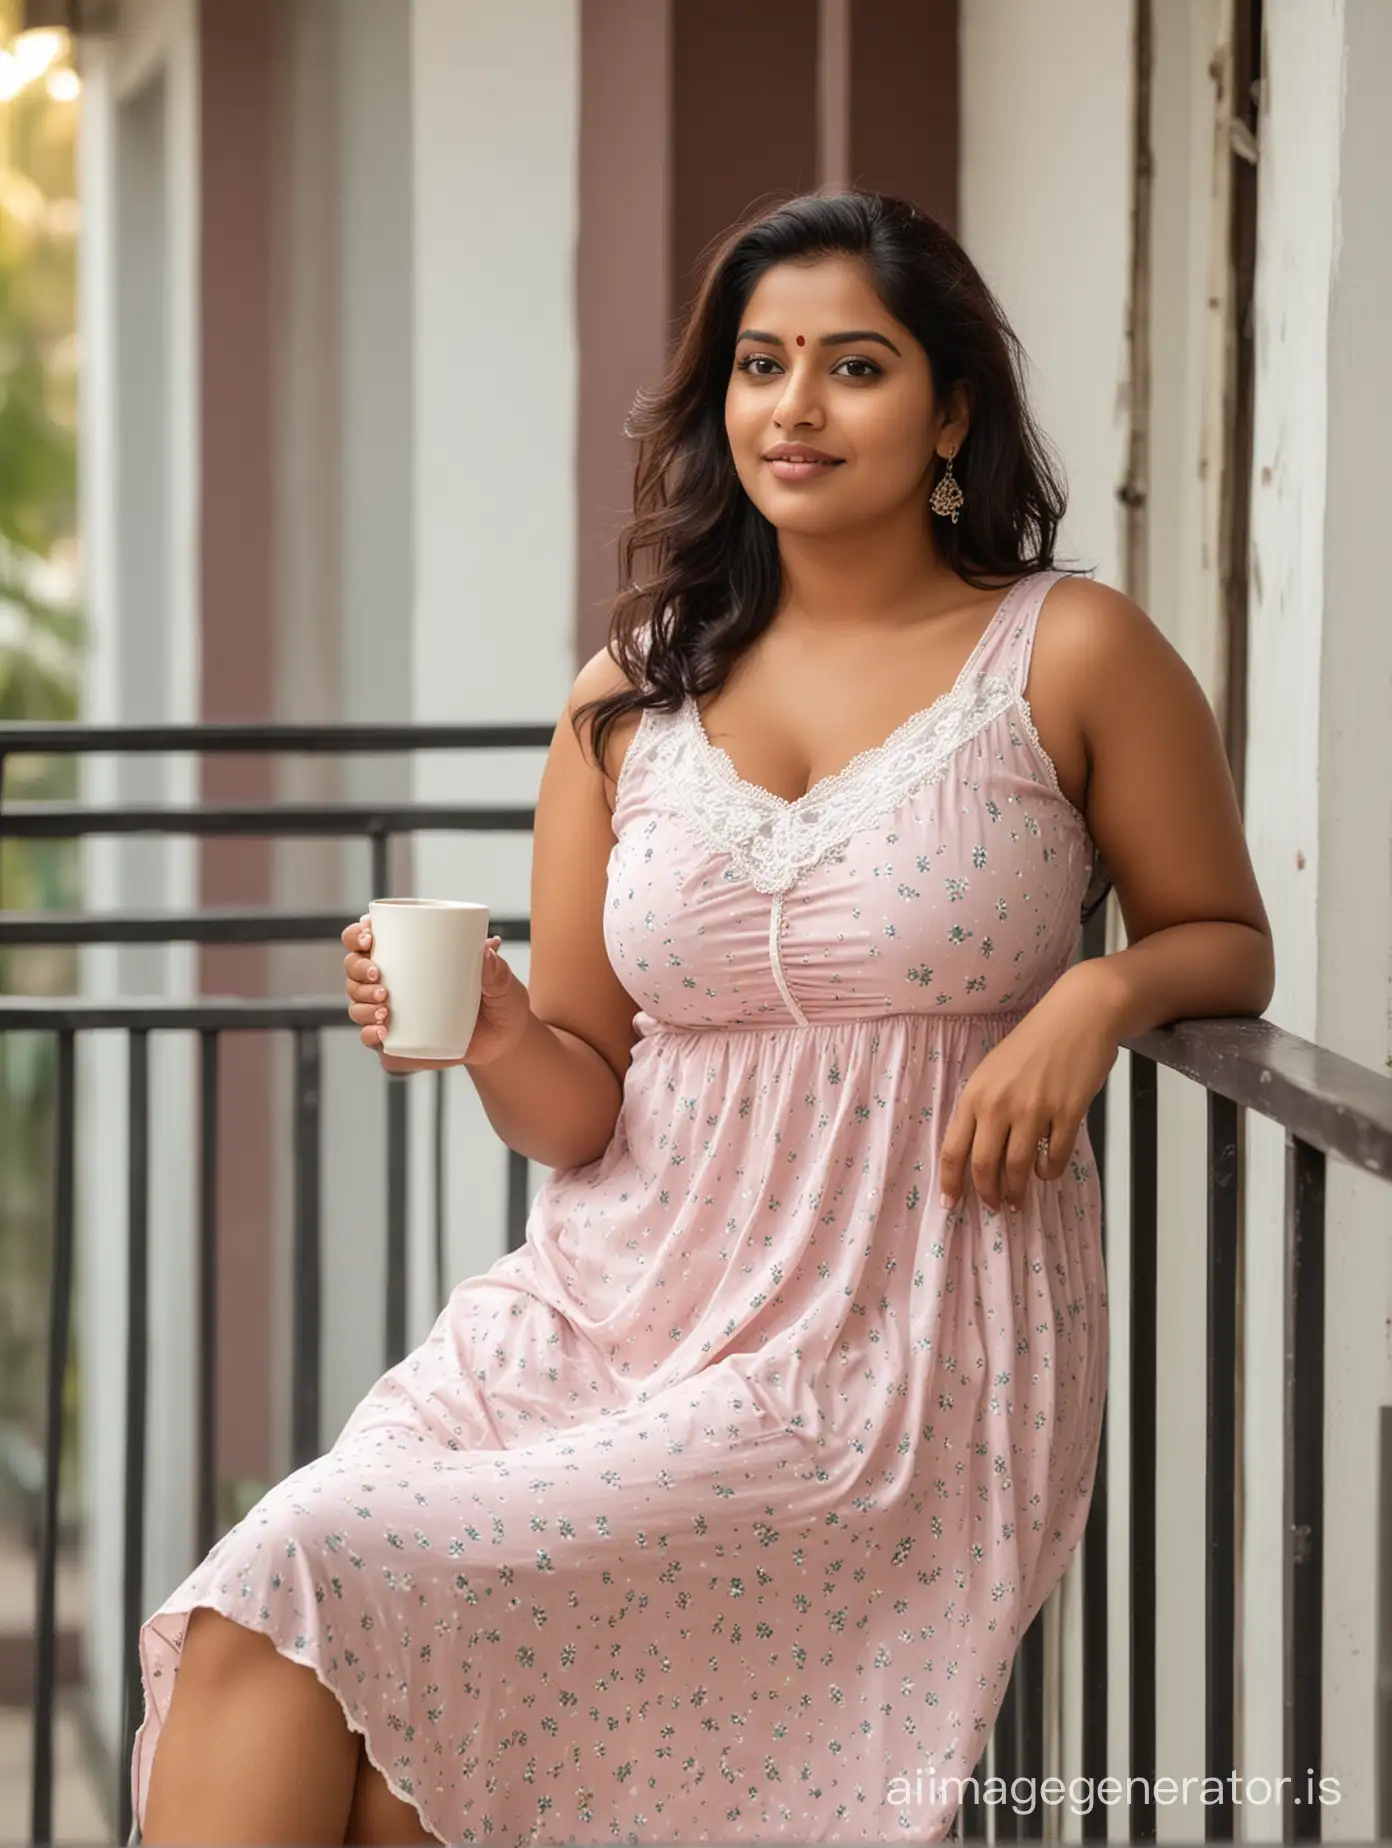 Indian-Plus-Size-Woman-Enjoying-Coffee-on-Balcony-in-Sleeveless-Nightwear